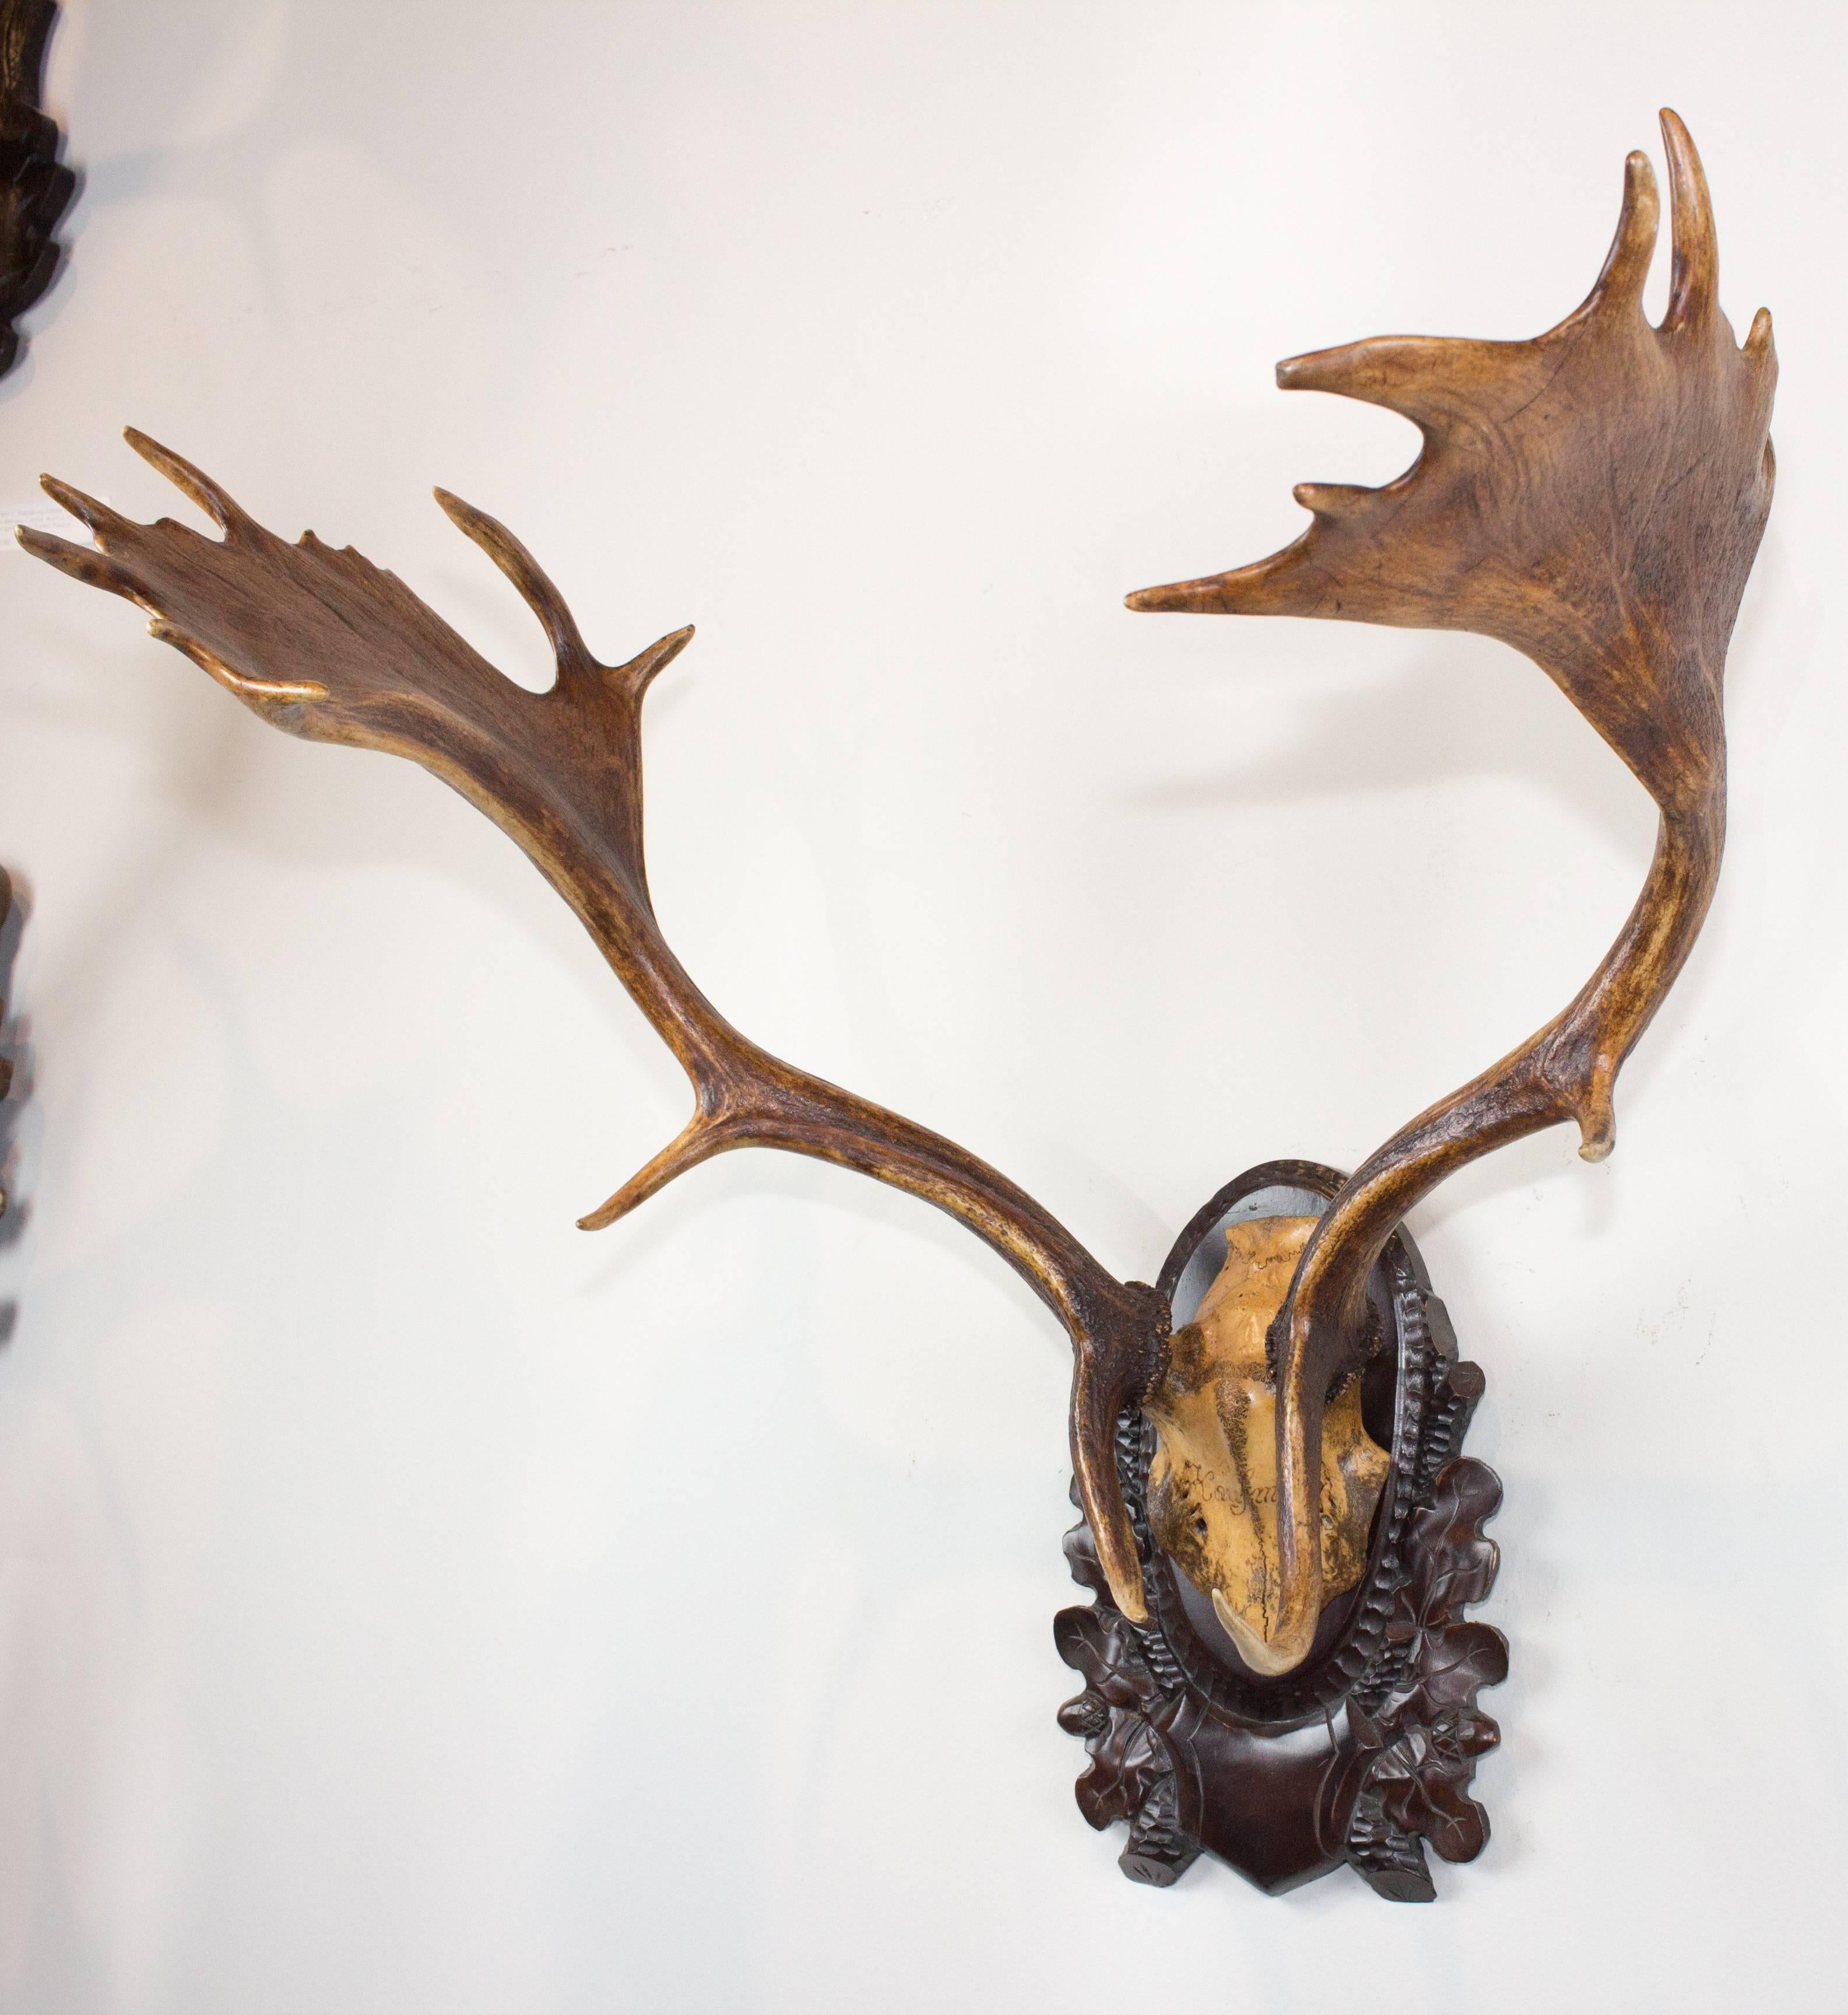 Carved 19th Century Habsburg Fallow Deer from Eckartsau Castle on Black Forest Plaque